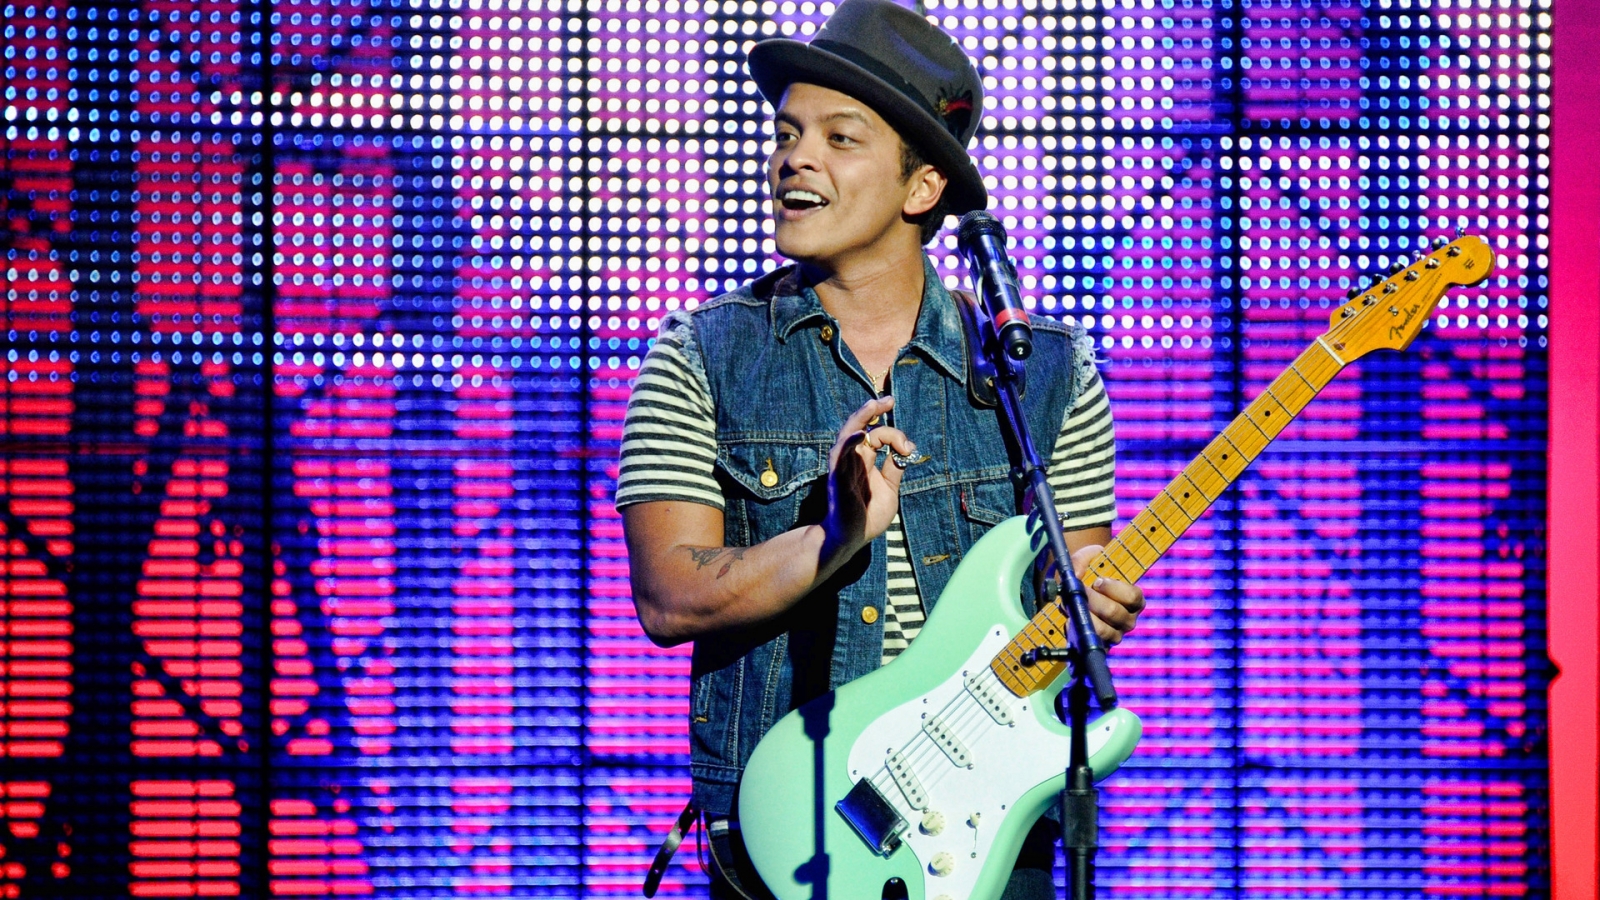 Bruno Mars in Concert for 1600 x 900 HDTV resolution